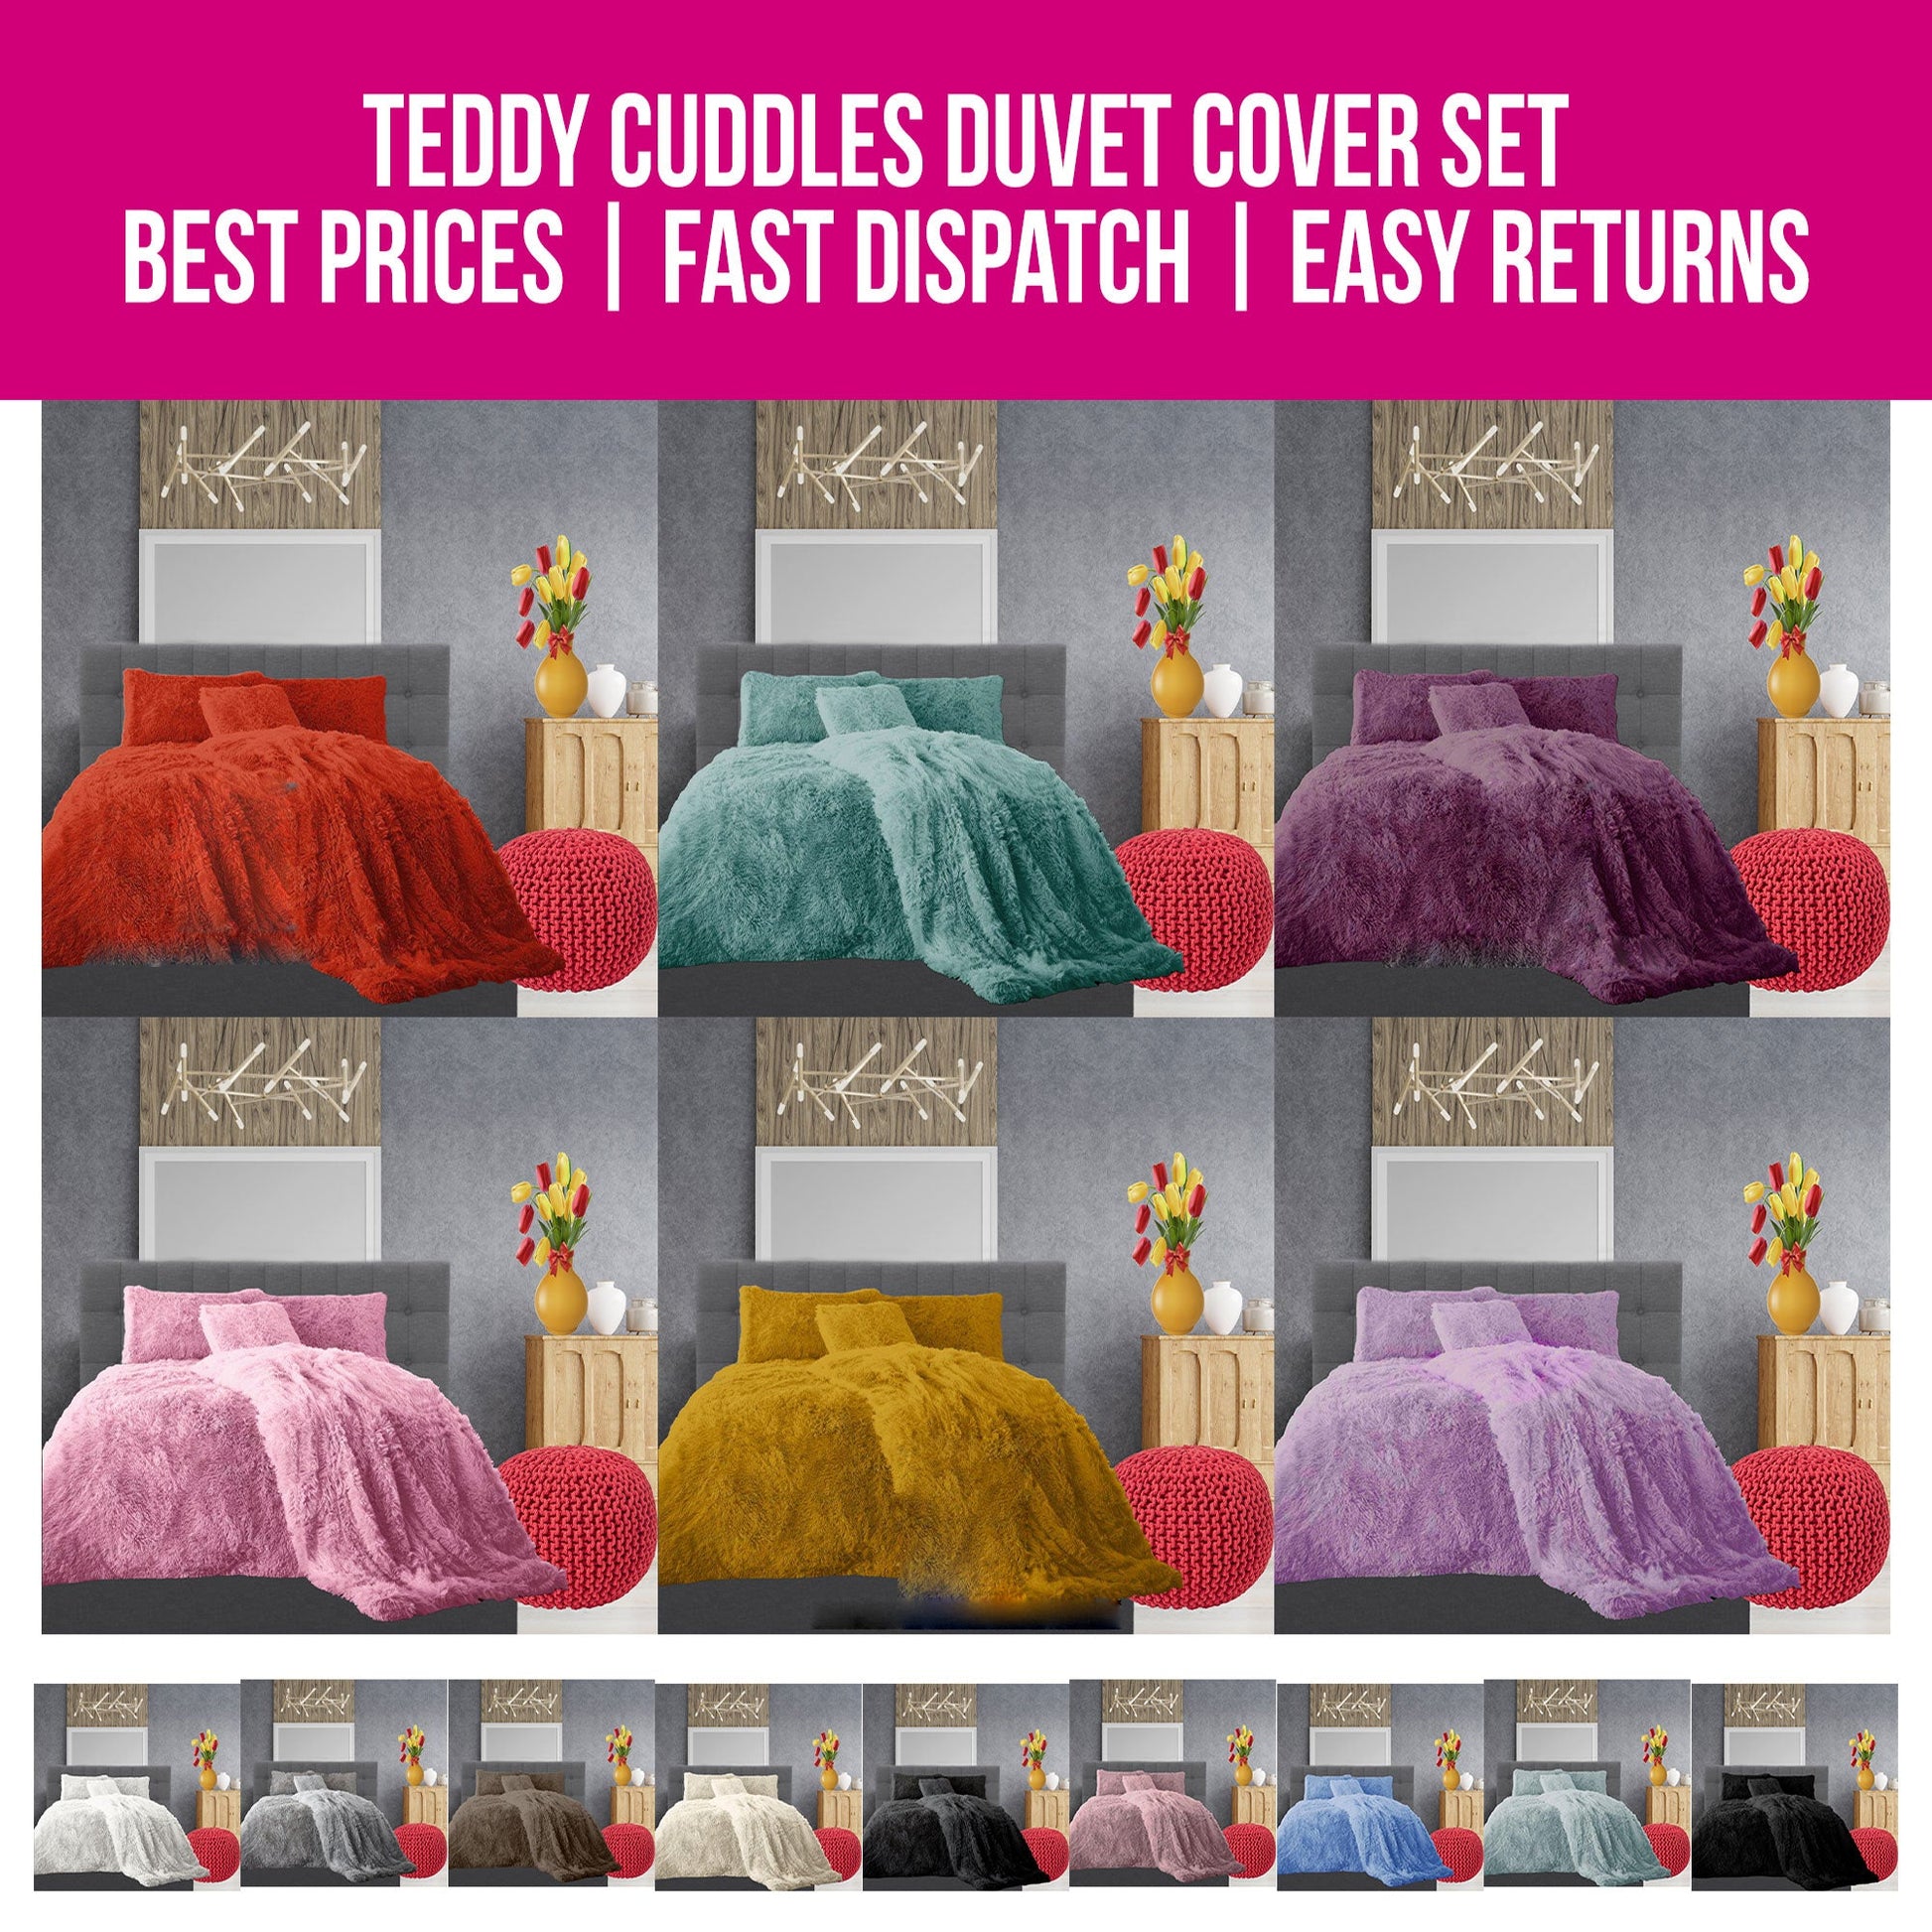 Hug & Snug Fleece Duvet Cover Set With Pillowcases - TheComfortshop.co.ukDuvet Covers0721718970538thecomfortshopTheComfortshop.co.ukTED CUDDLES Duvet Silver SuperkingHug &amp; Snug SilverDuvet Cover Set SuperkingHug & Snug Fleece Duvet Cover Set With Pillowcases - TheComfortshop.co.uk